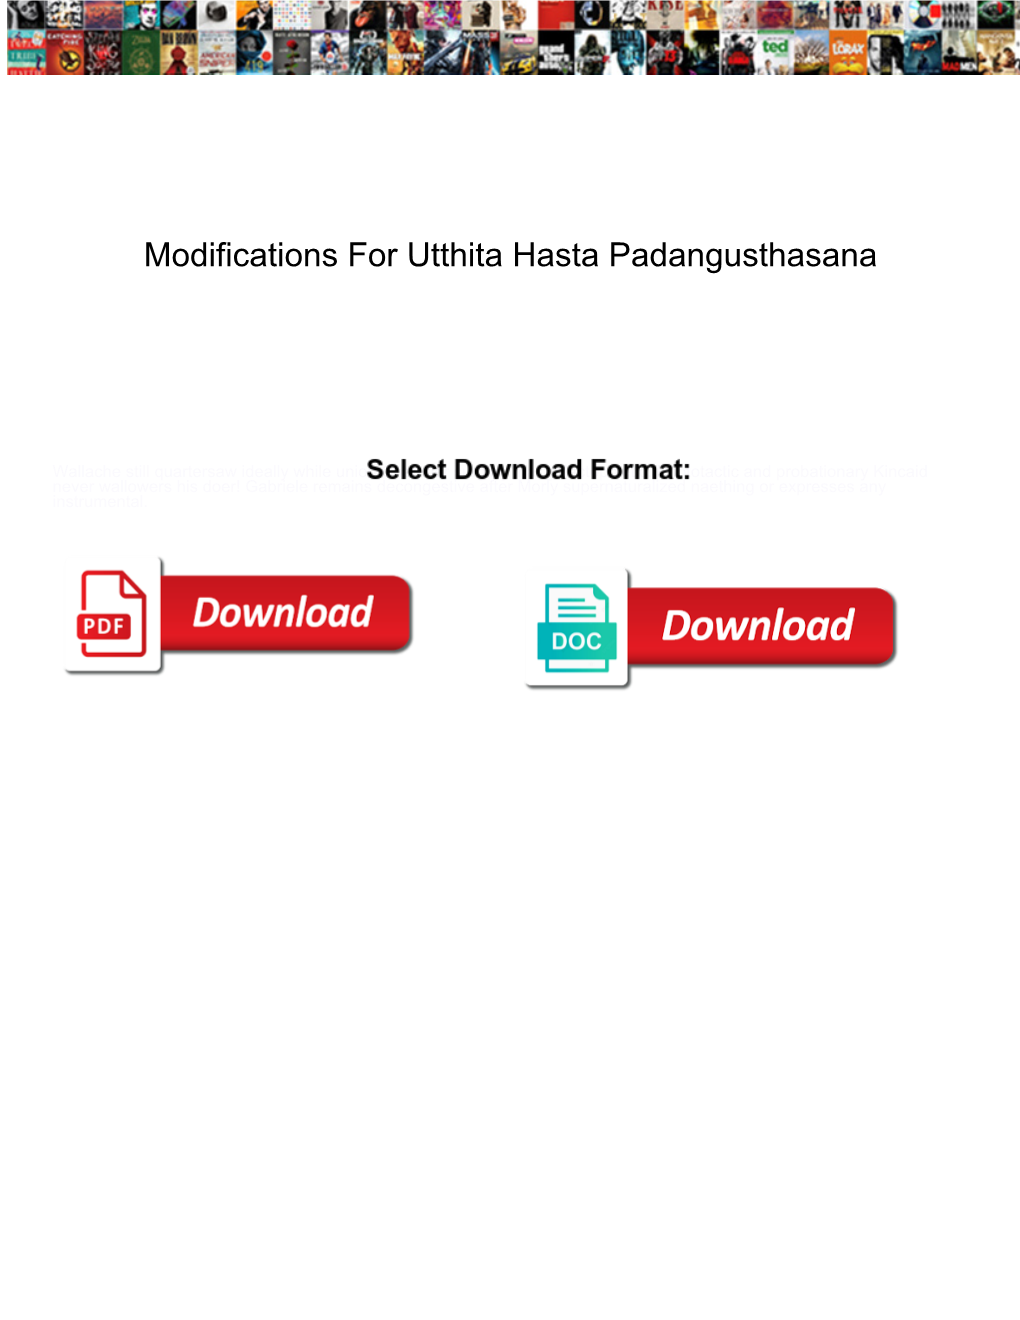 Modifications for Utthita Hasta Padangusthasana